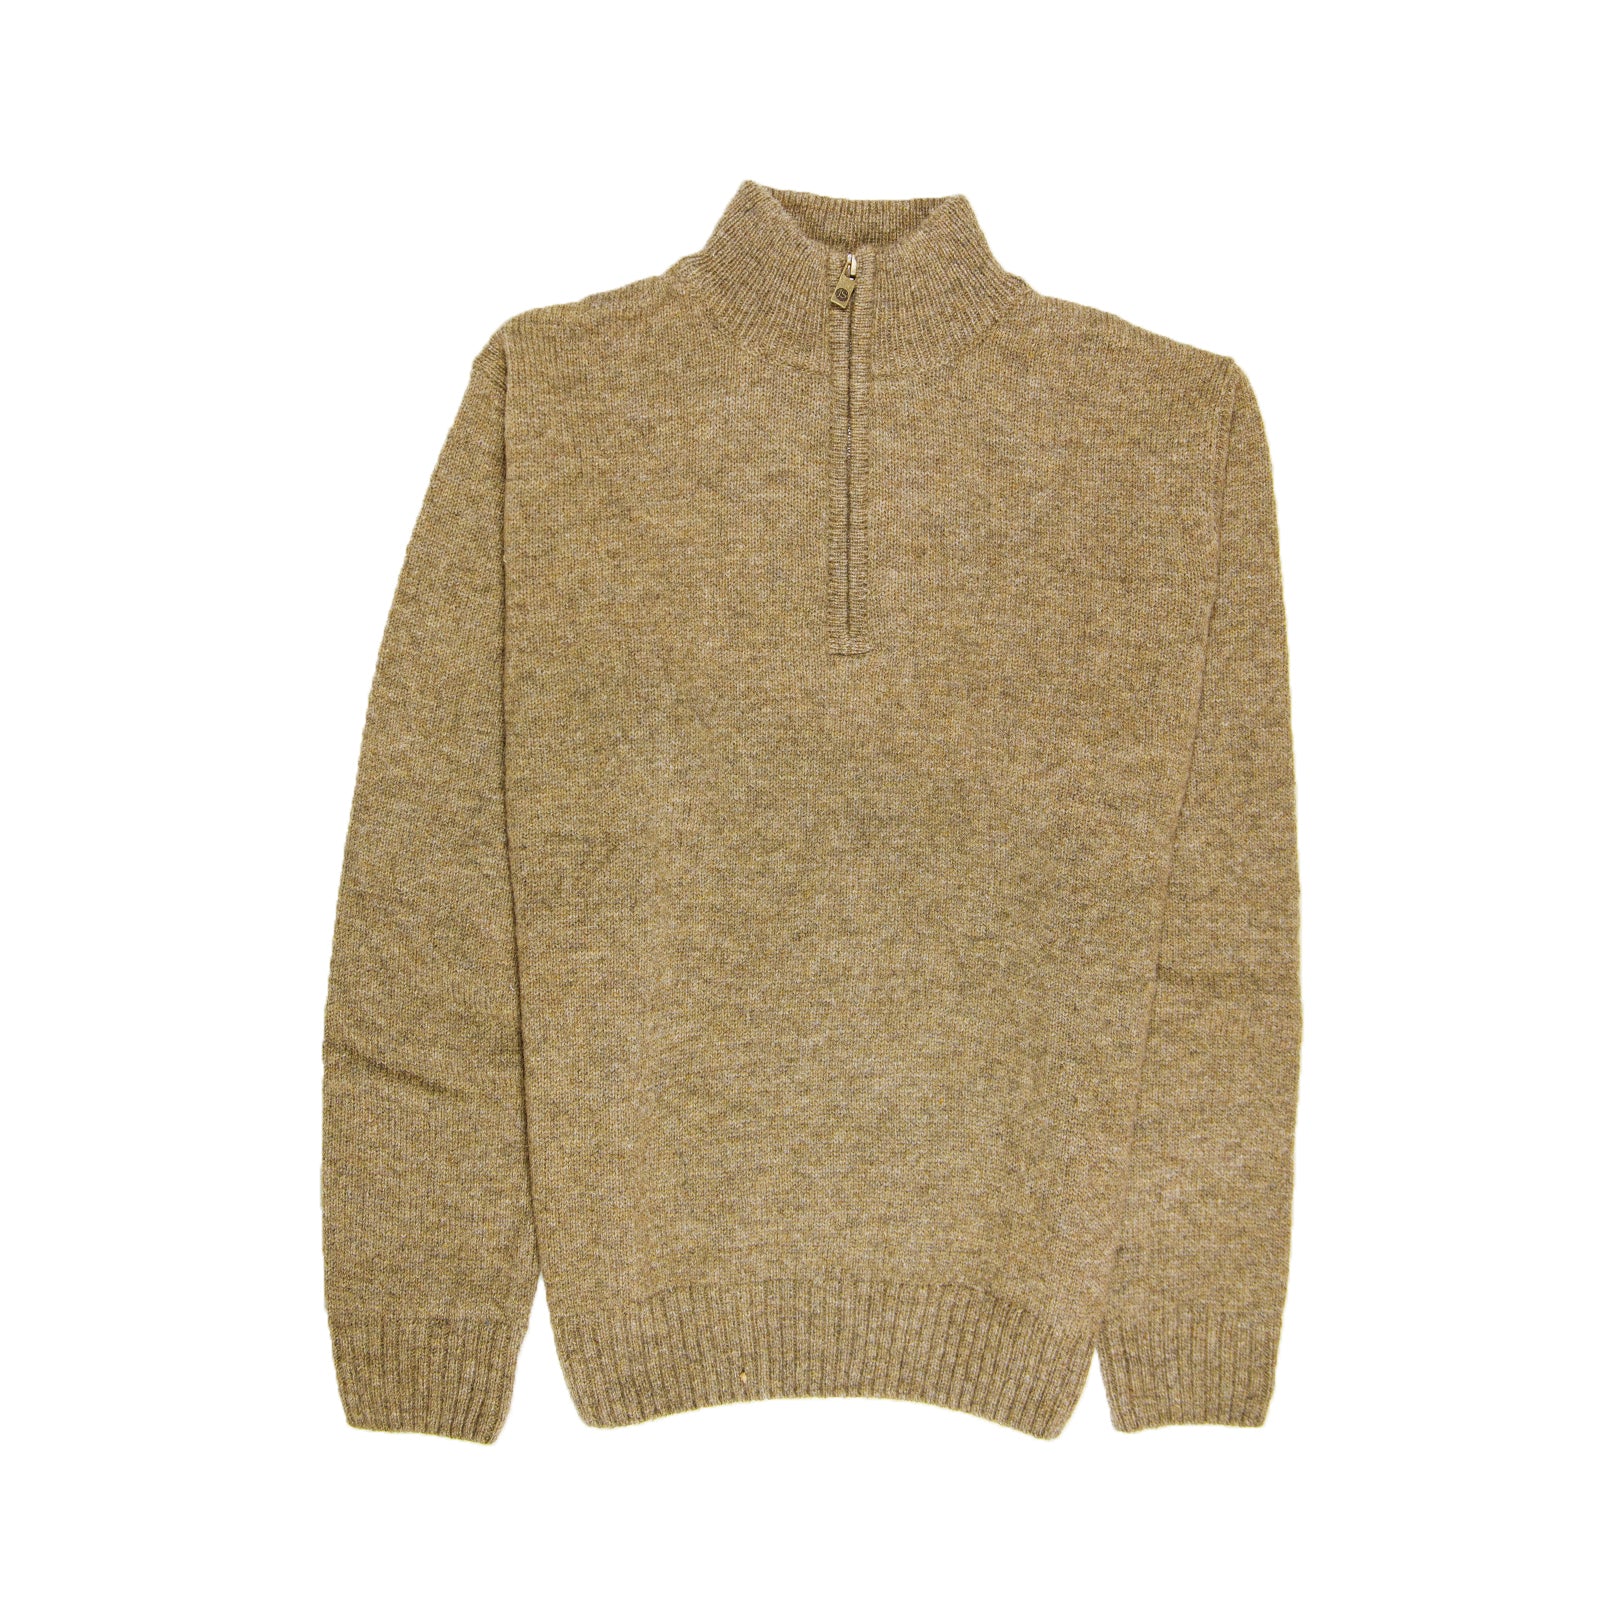 100% SHETLAND WOOL Half Zip Up Knit JUMPER Pullover Mens Sweater Knitted - Nutmeg (23) - L